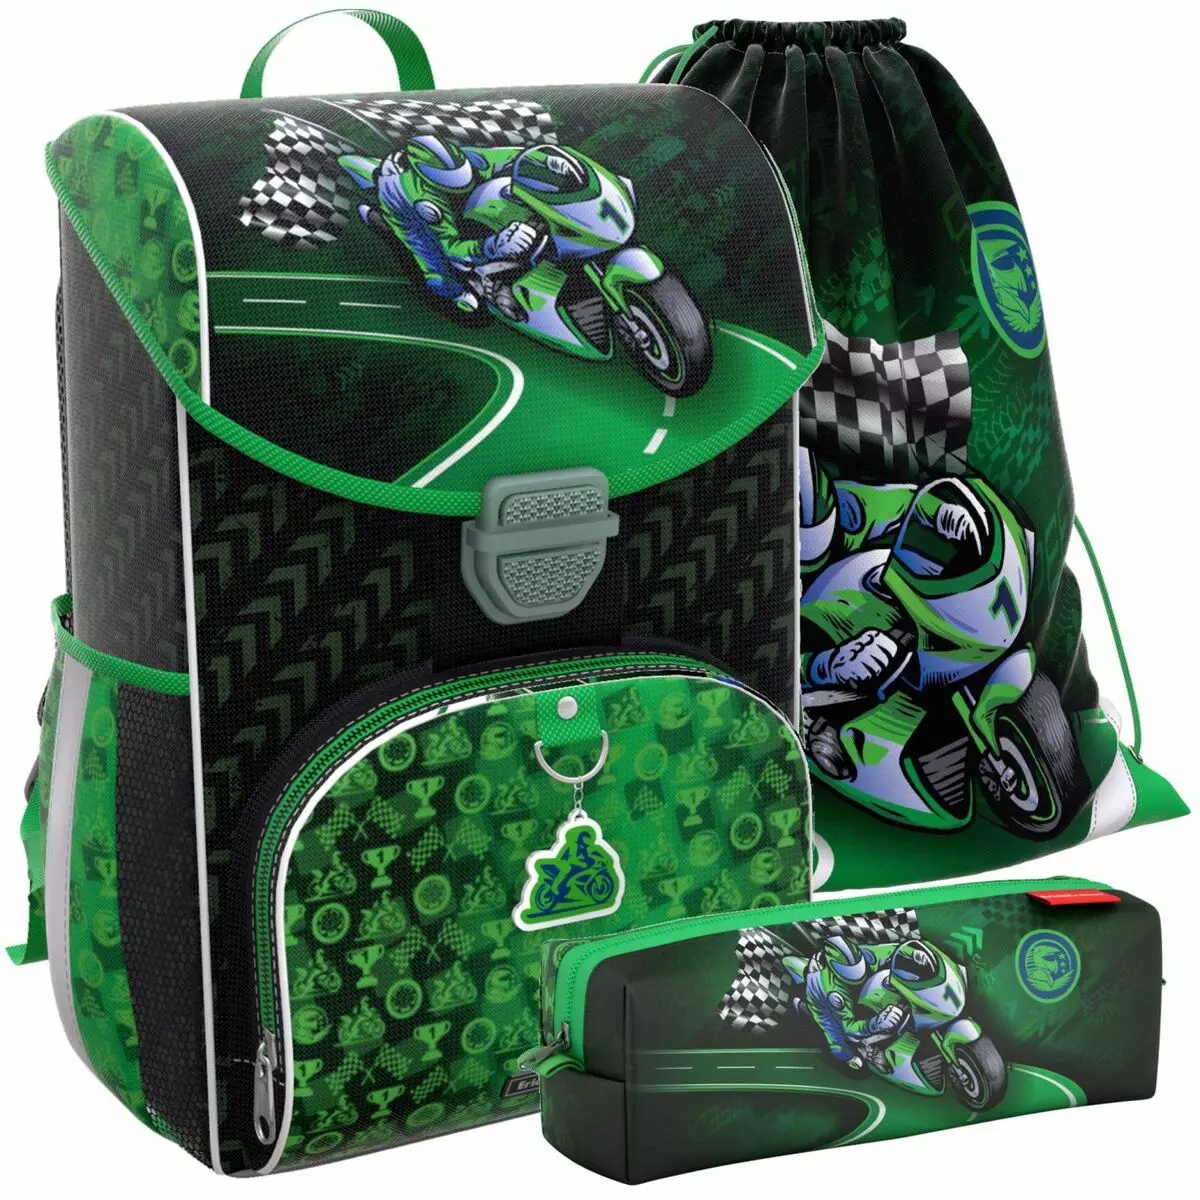 Backpacks ଏବଂ Erich Krause ପଦବାଚ୍ୟ: କାରଣ ବାଳିକା ବିଦ୍ୟାଳୟ backpacks ଏବଂ ପ୍ରଥମ-graders ବାଳକମାନଙ୍କୁ, teens, ergonomic ପୁନଃ ଅନ୍ୟମାନଙ୍କ ସହିତ backpacks ପାଇଁ 15465_42